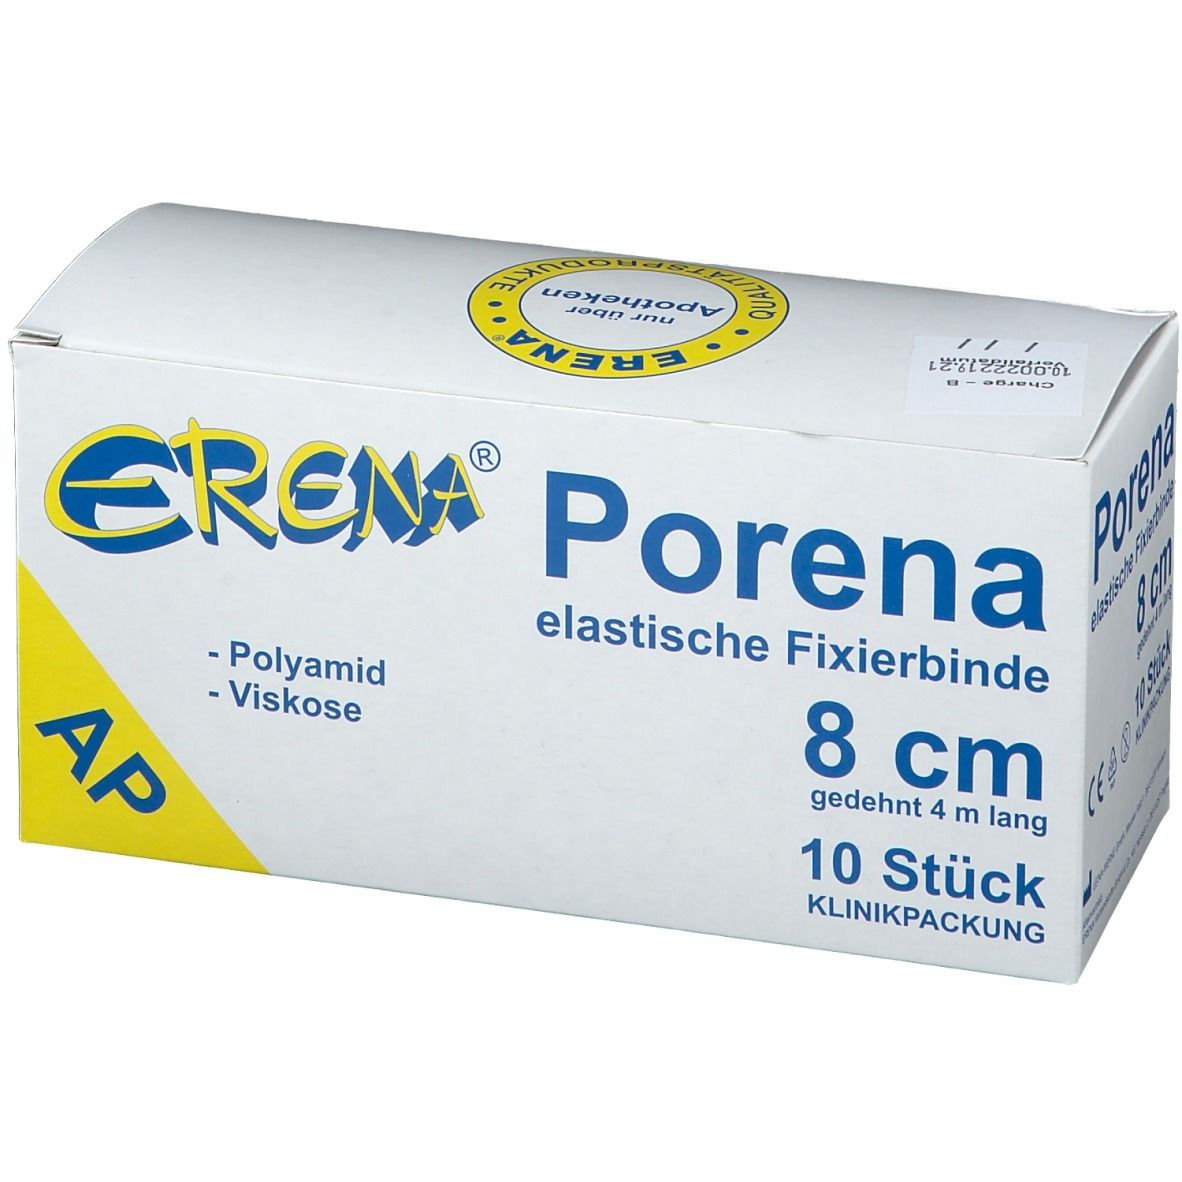 ERENA® Porena elastische Fixierbinde 8 cm x 4 m